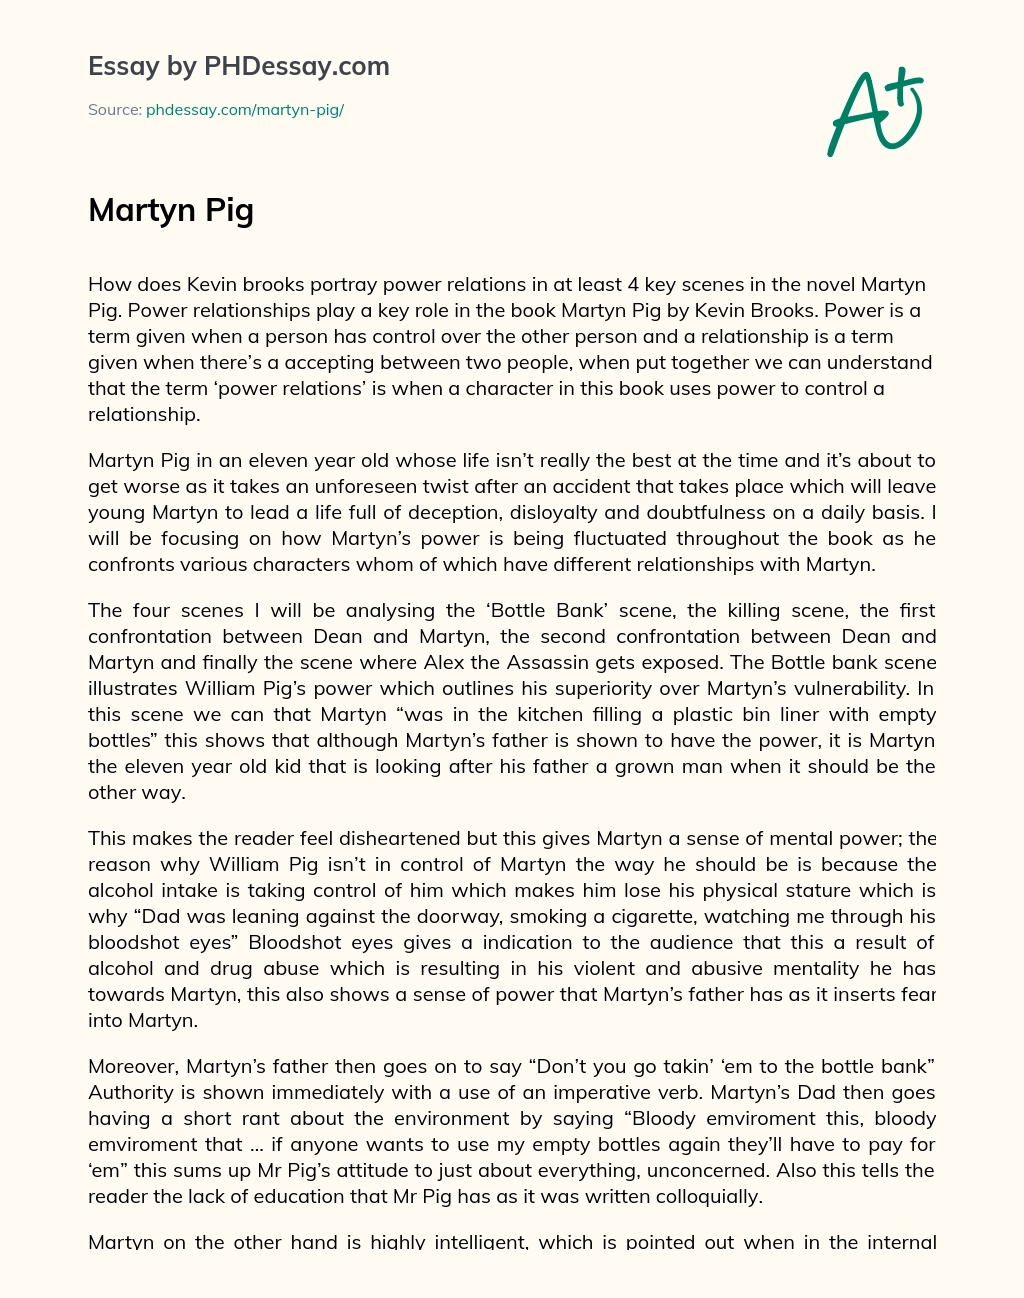 Martyn Pig essay